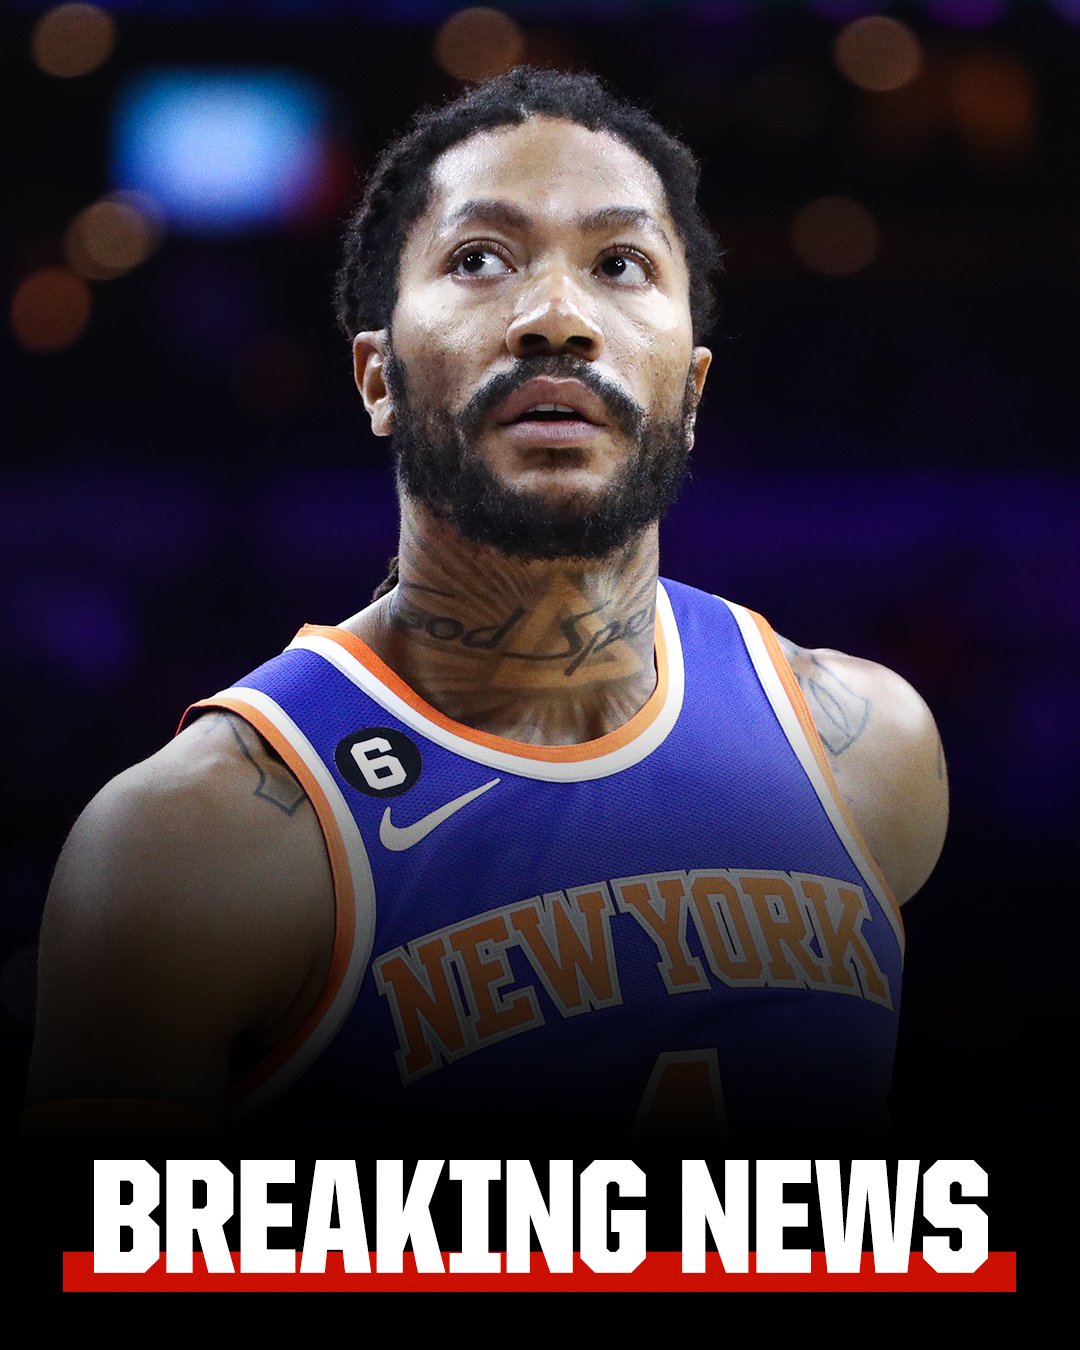 NBA on ESPN - Knicks announce that Derrick Rose will wear No. 25. (via New  York Knicks)